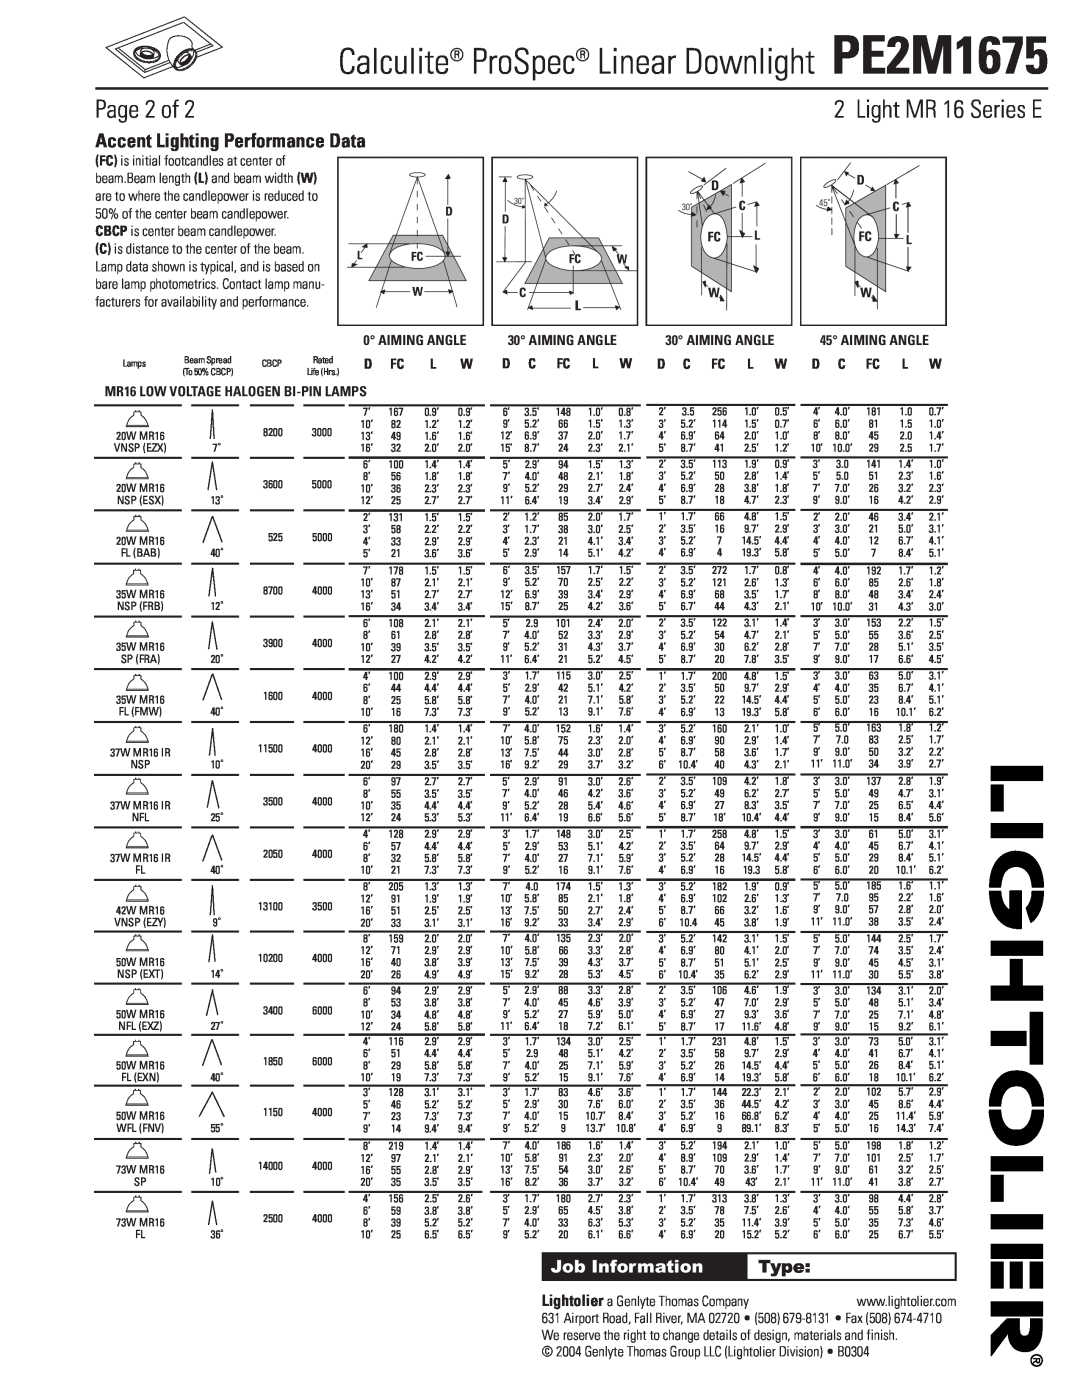 Lightolier Page 2 of, Accent Lighting Performance Data, Calculite ProSpec Linear Downlight PE2M1675, Job Information 